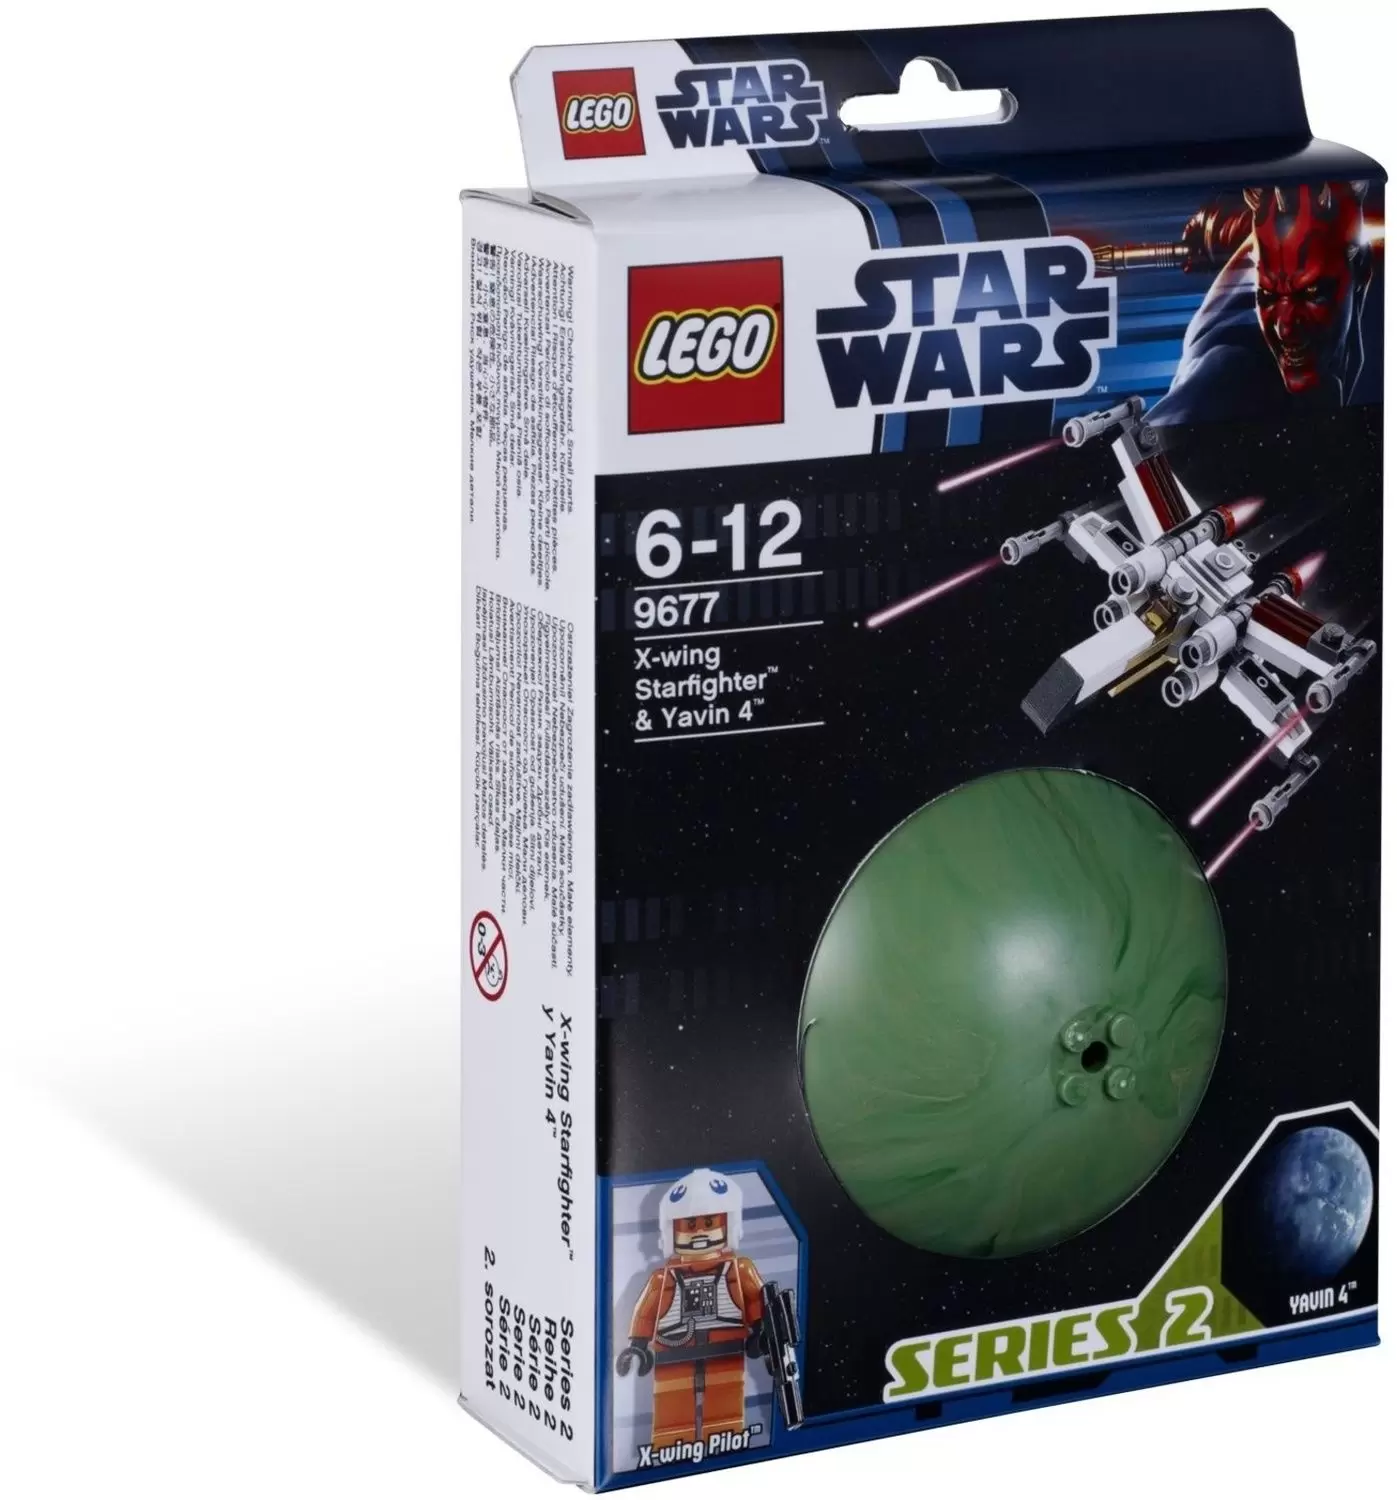 LEGO Star Wars - X-wing Starfighter & Yavin 4